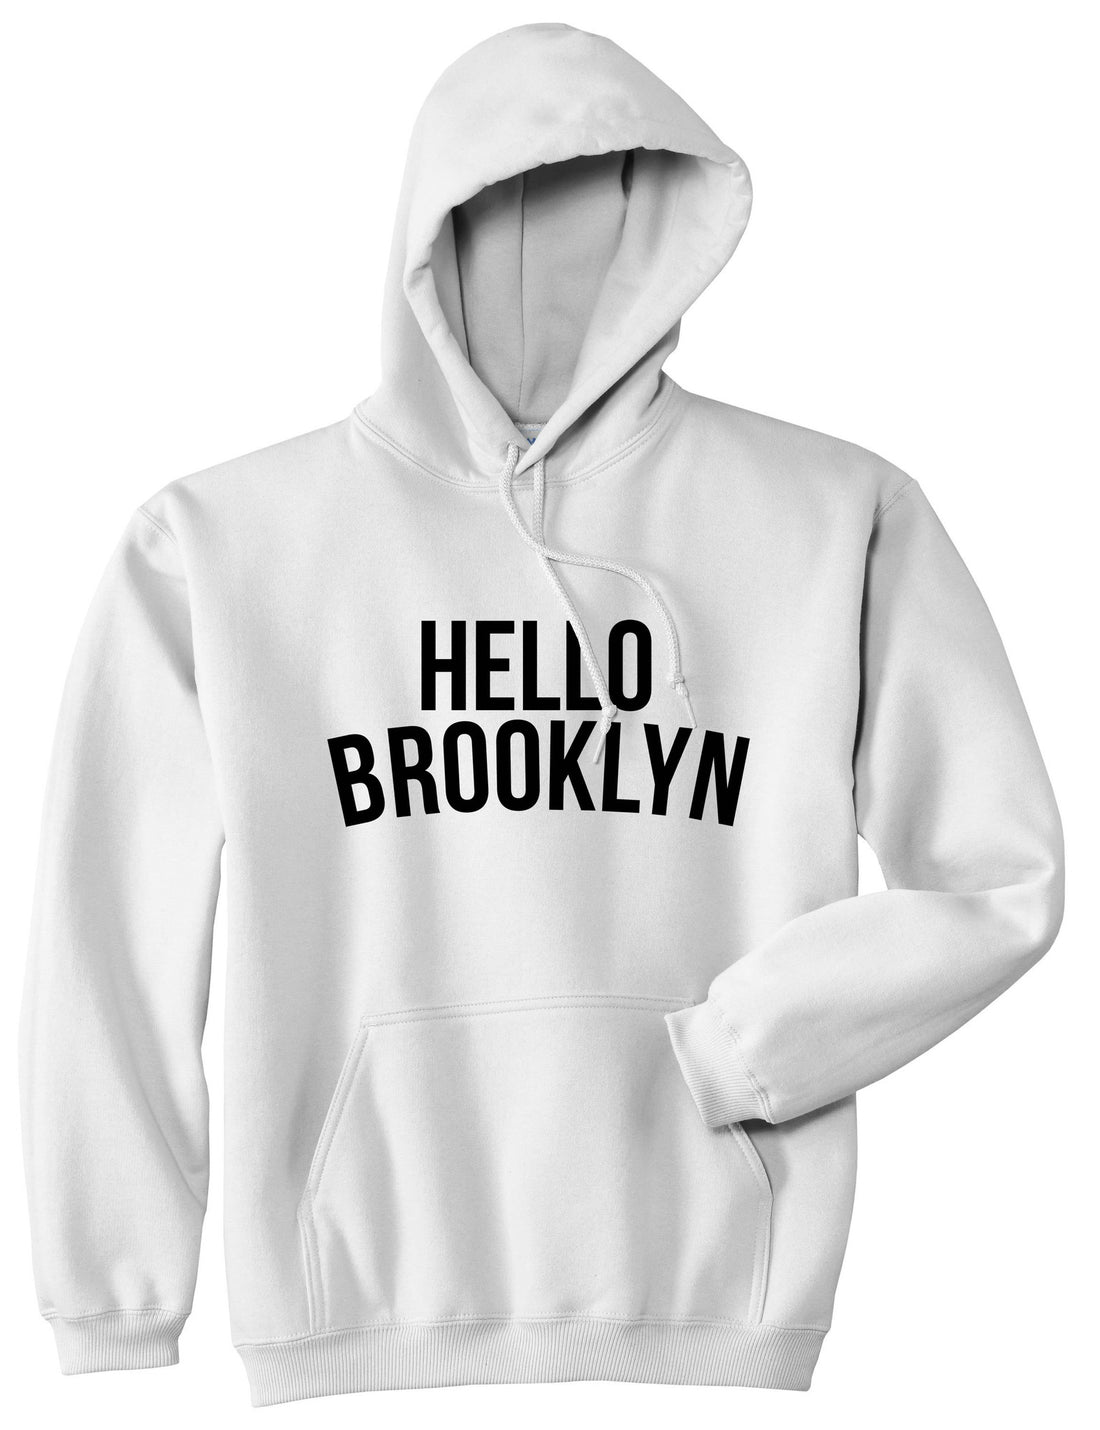 Hello Brooklyn Boys Kids Pullover Hoodie Hoody in White By Kings Of NY